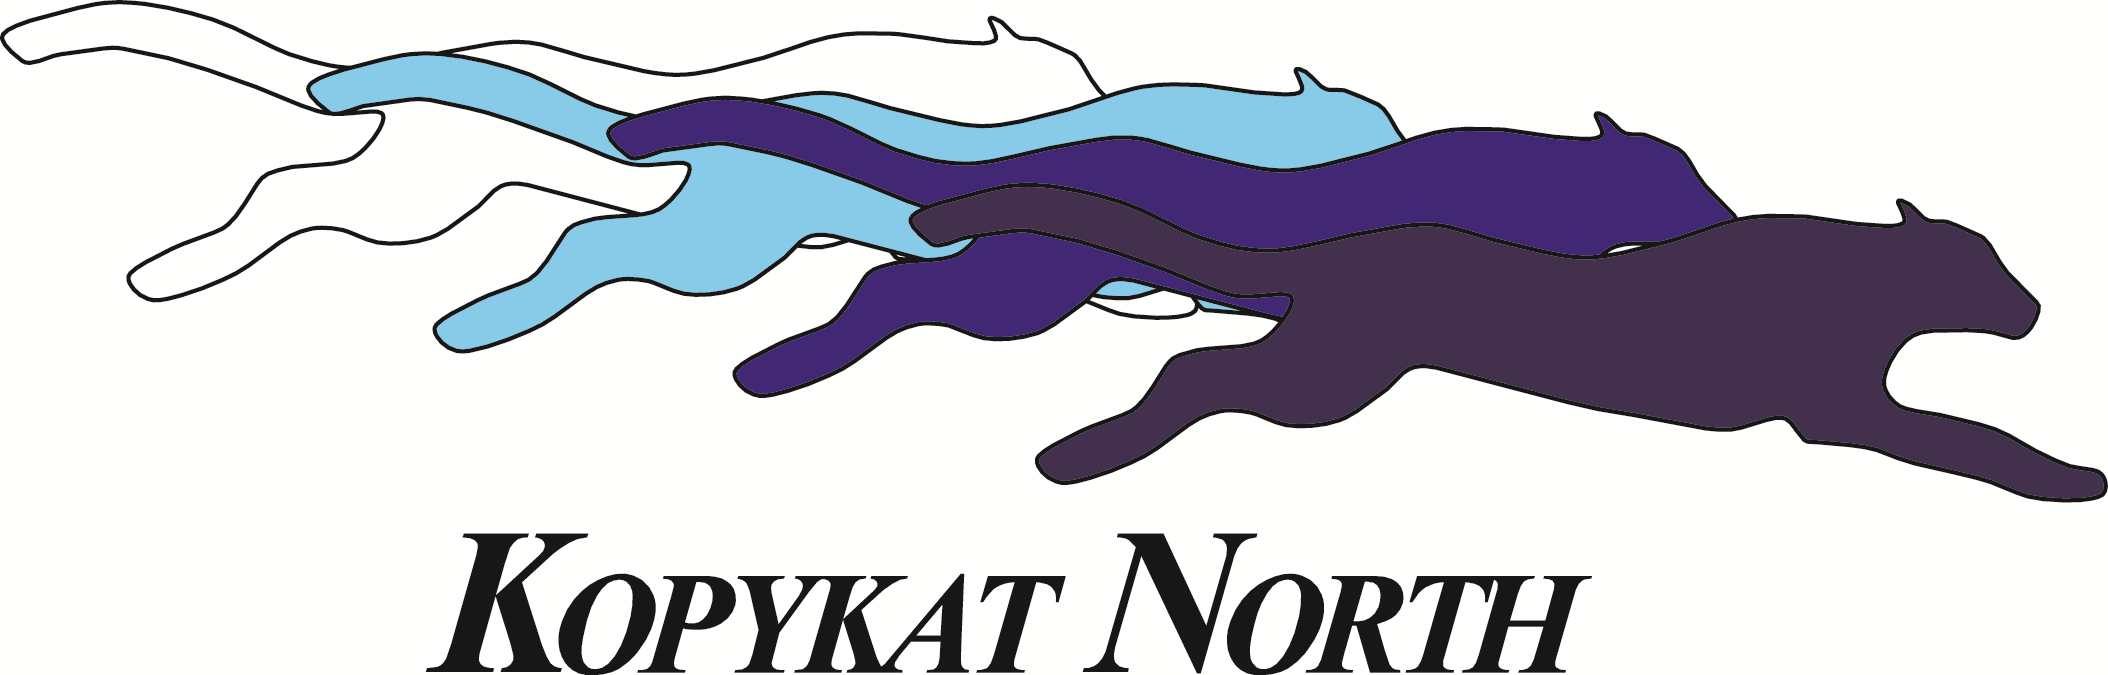 KopyKat North